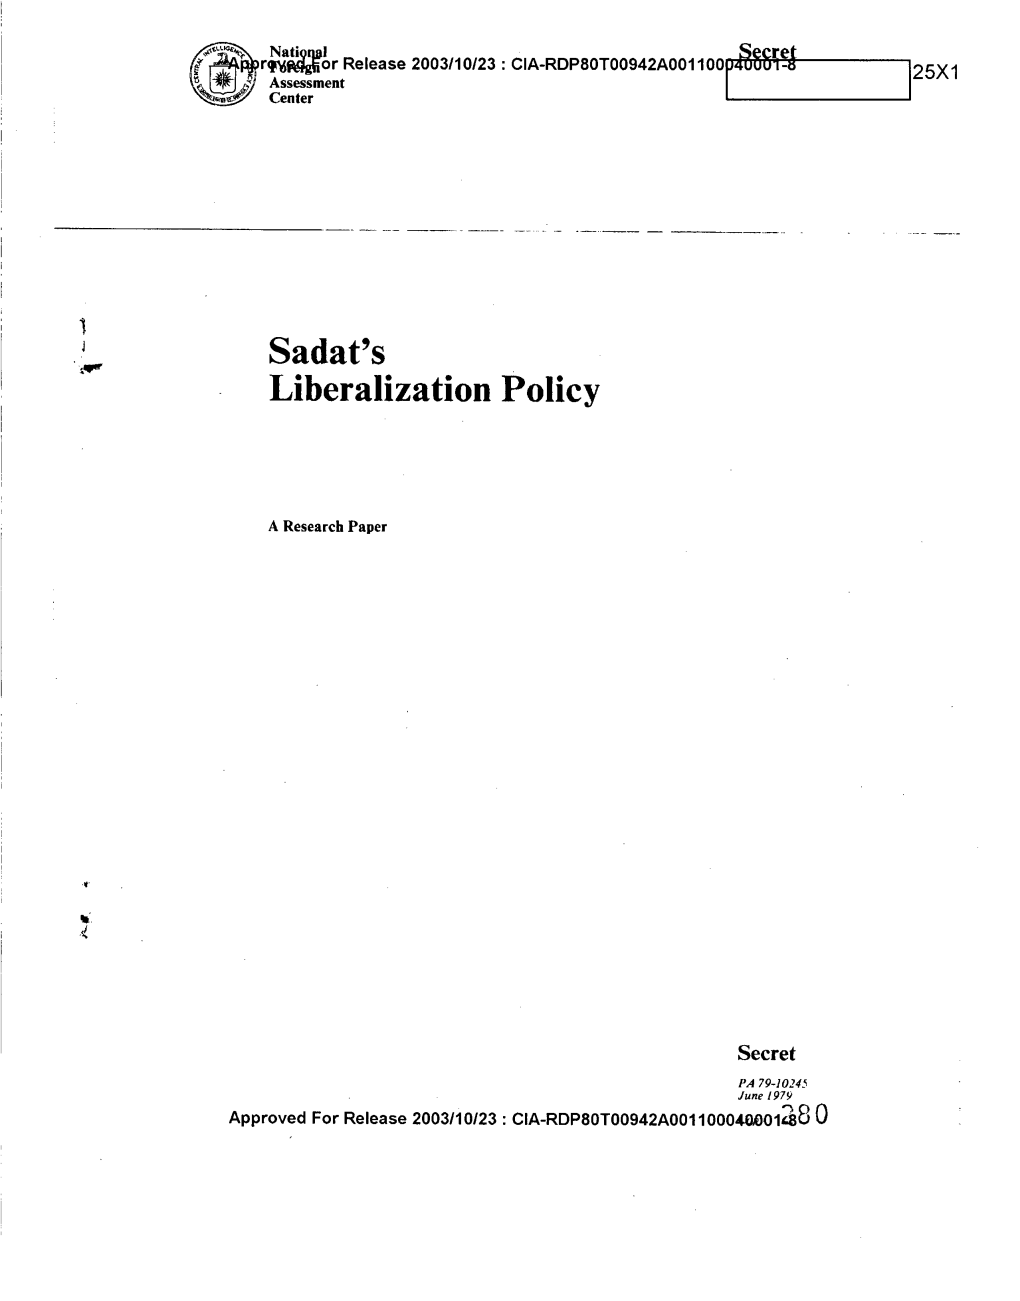 Sadat's Liberalization Policy